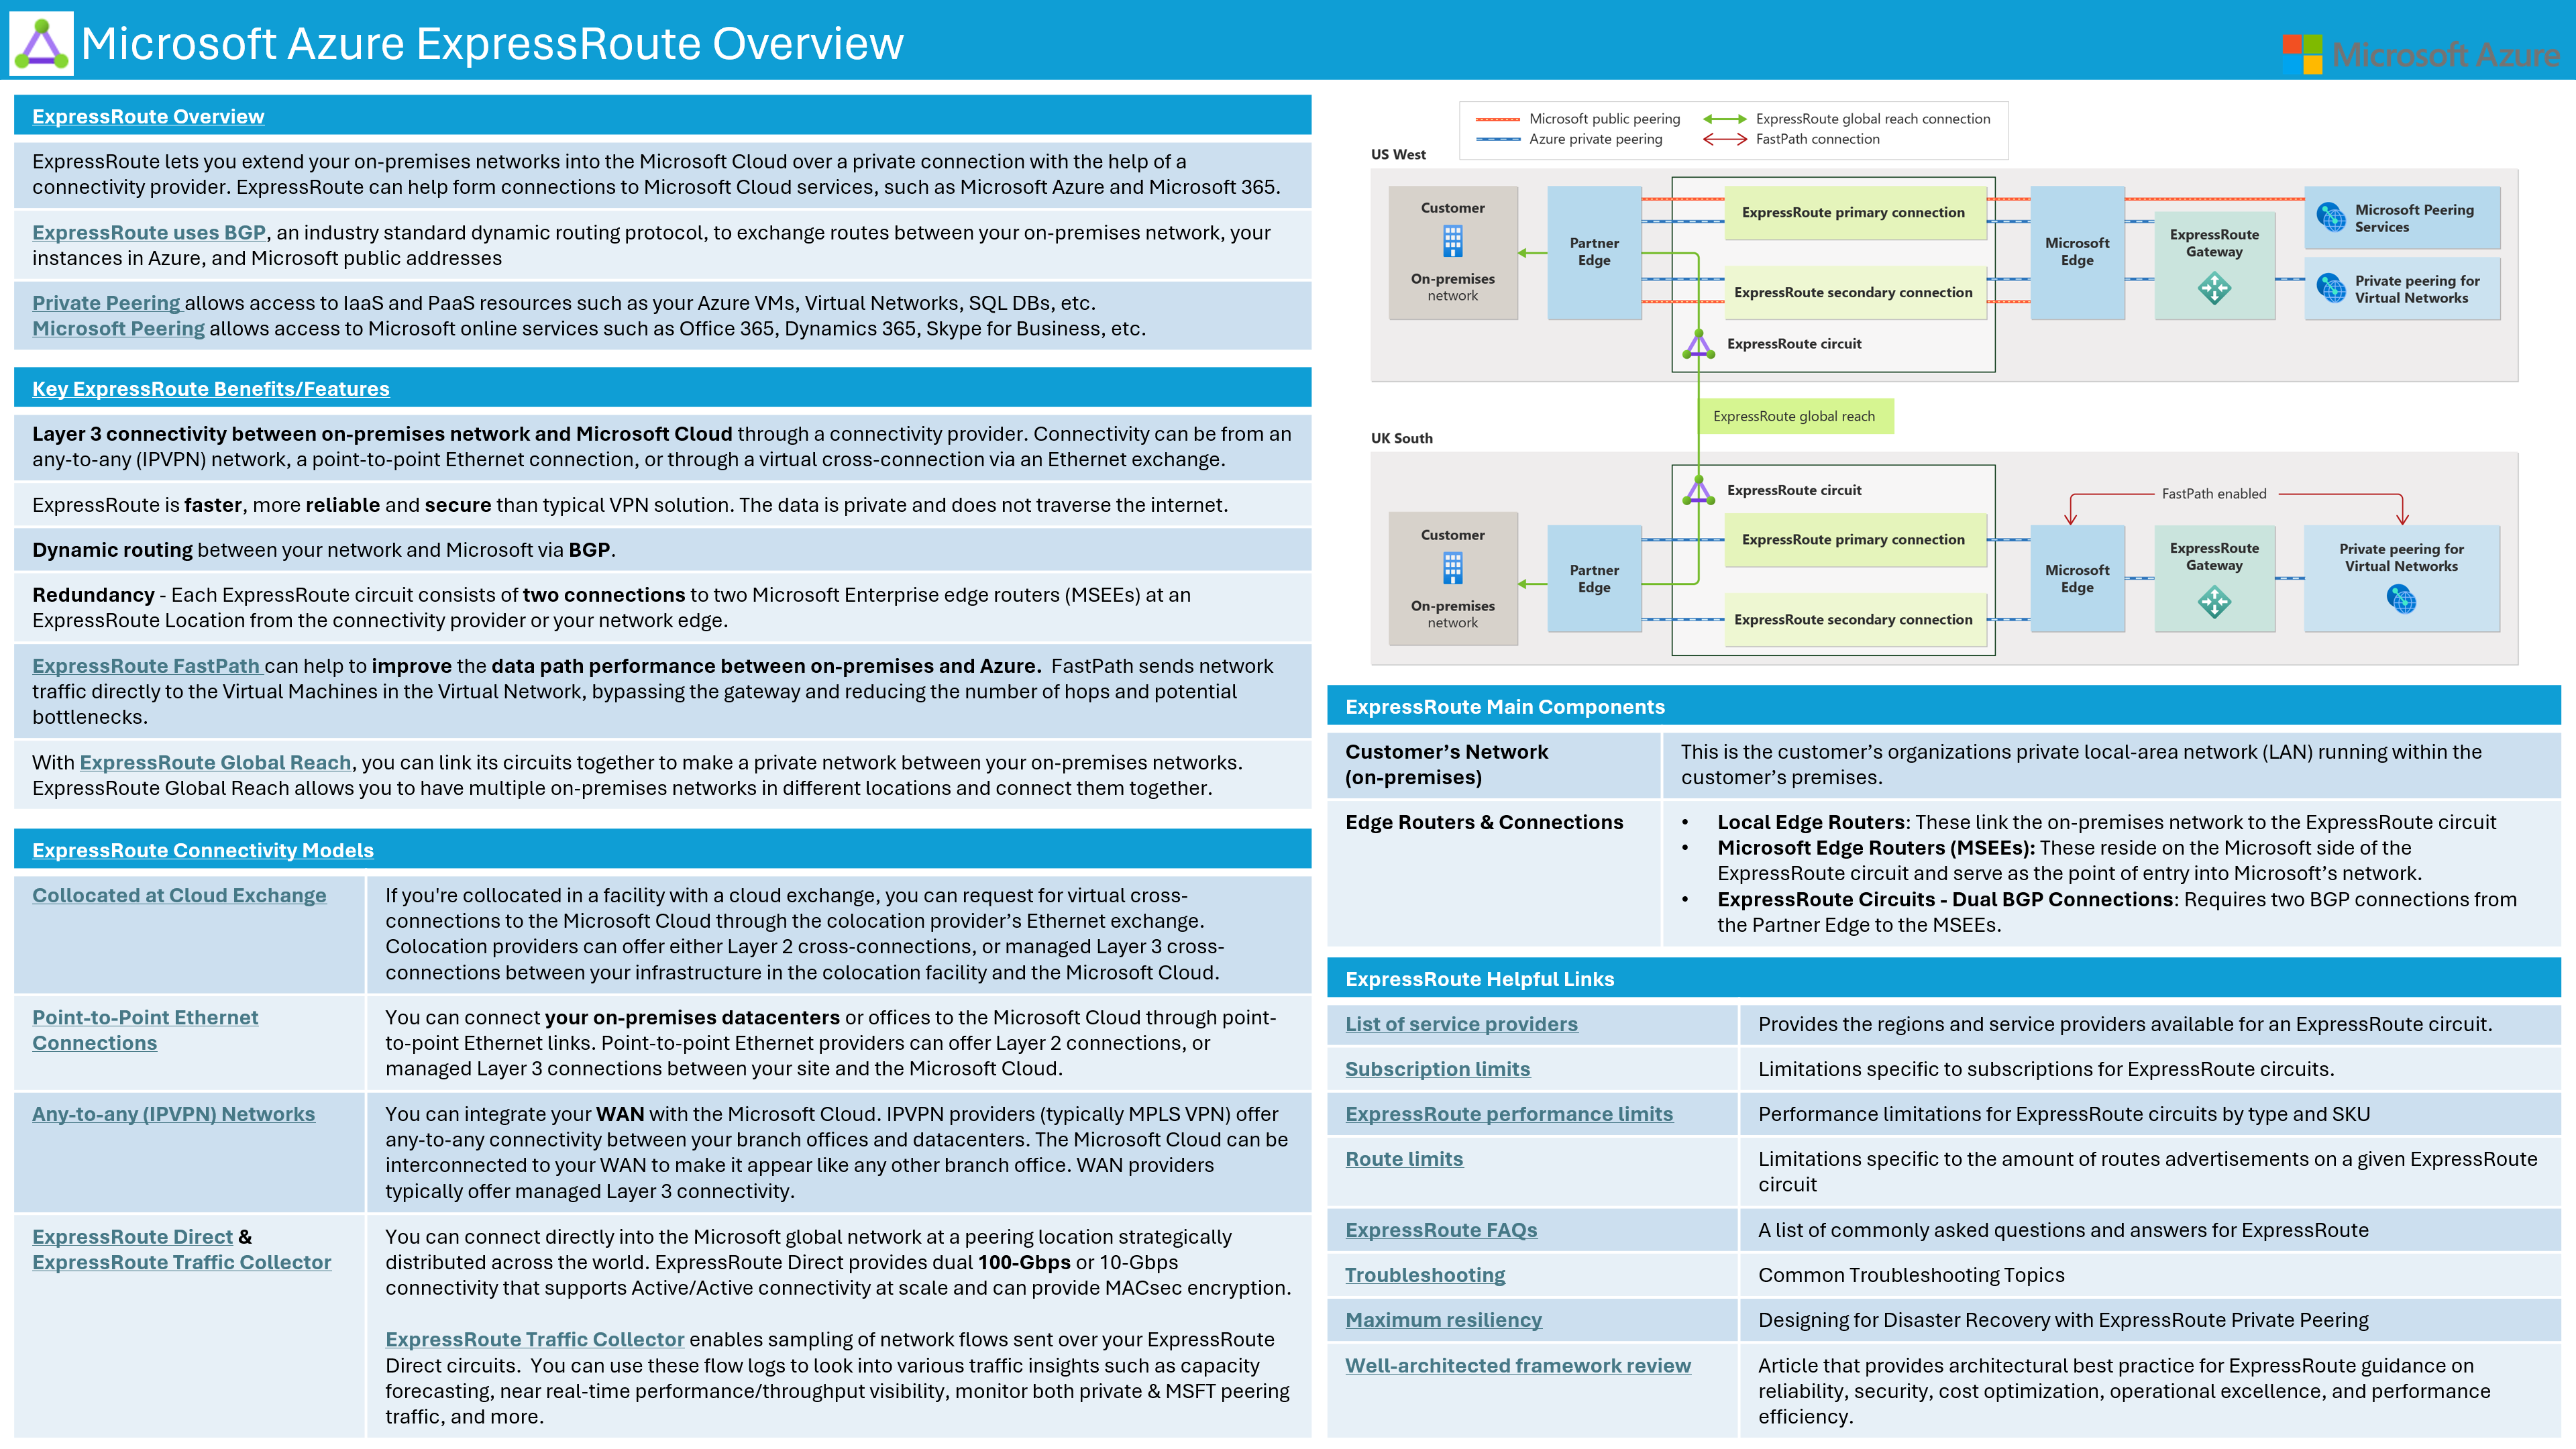 Microsoft Azure ExpressRoute Overview Cheat Sheet